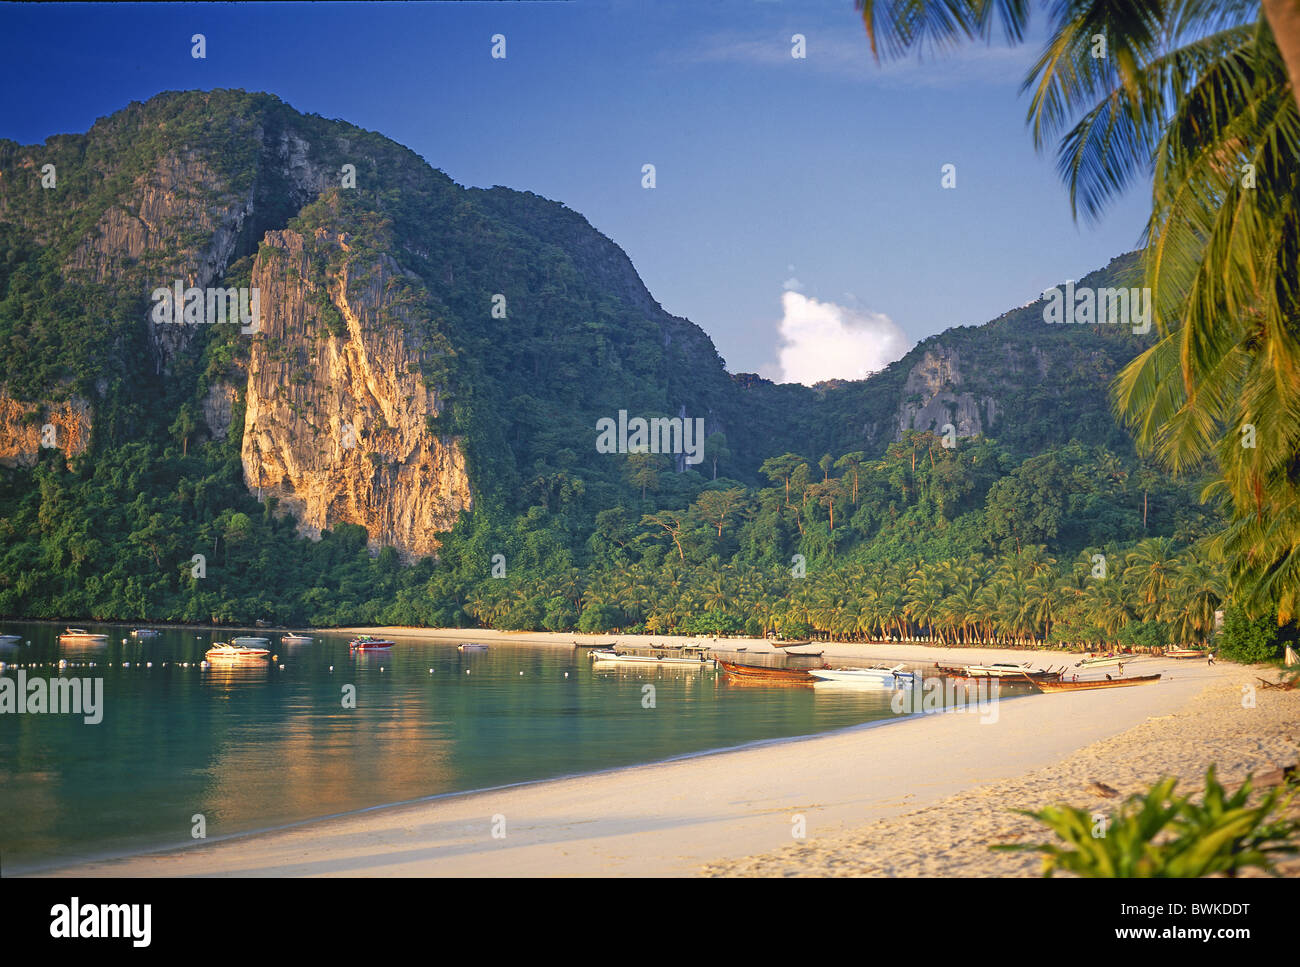 Thailand Asia Krabi province island isle Phi Phi Don beach seashore scenery landscape sandy beach coast se Stock Photo